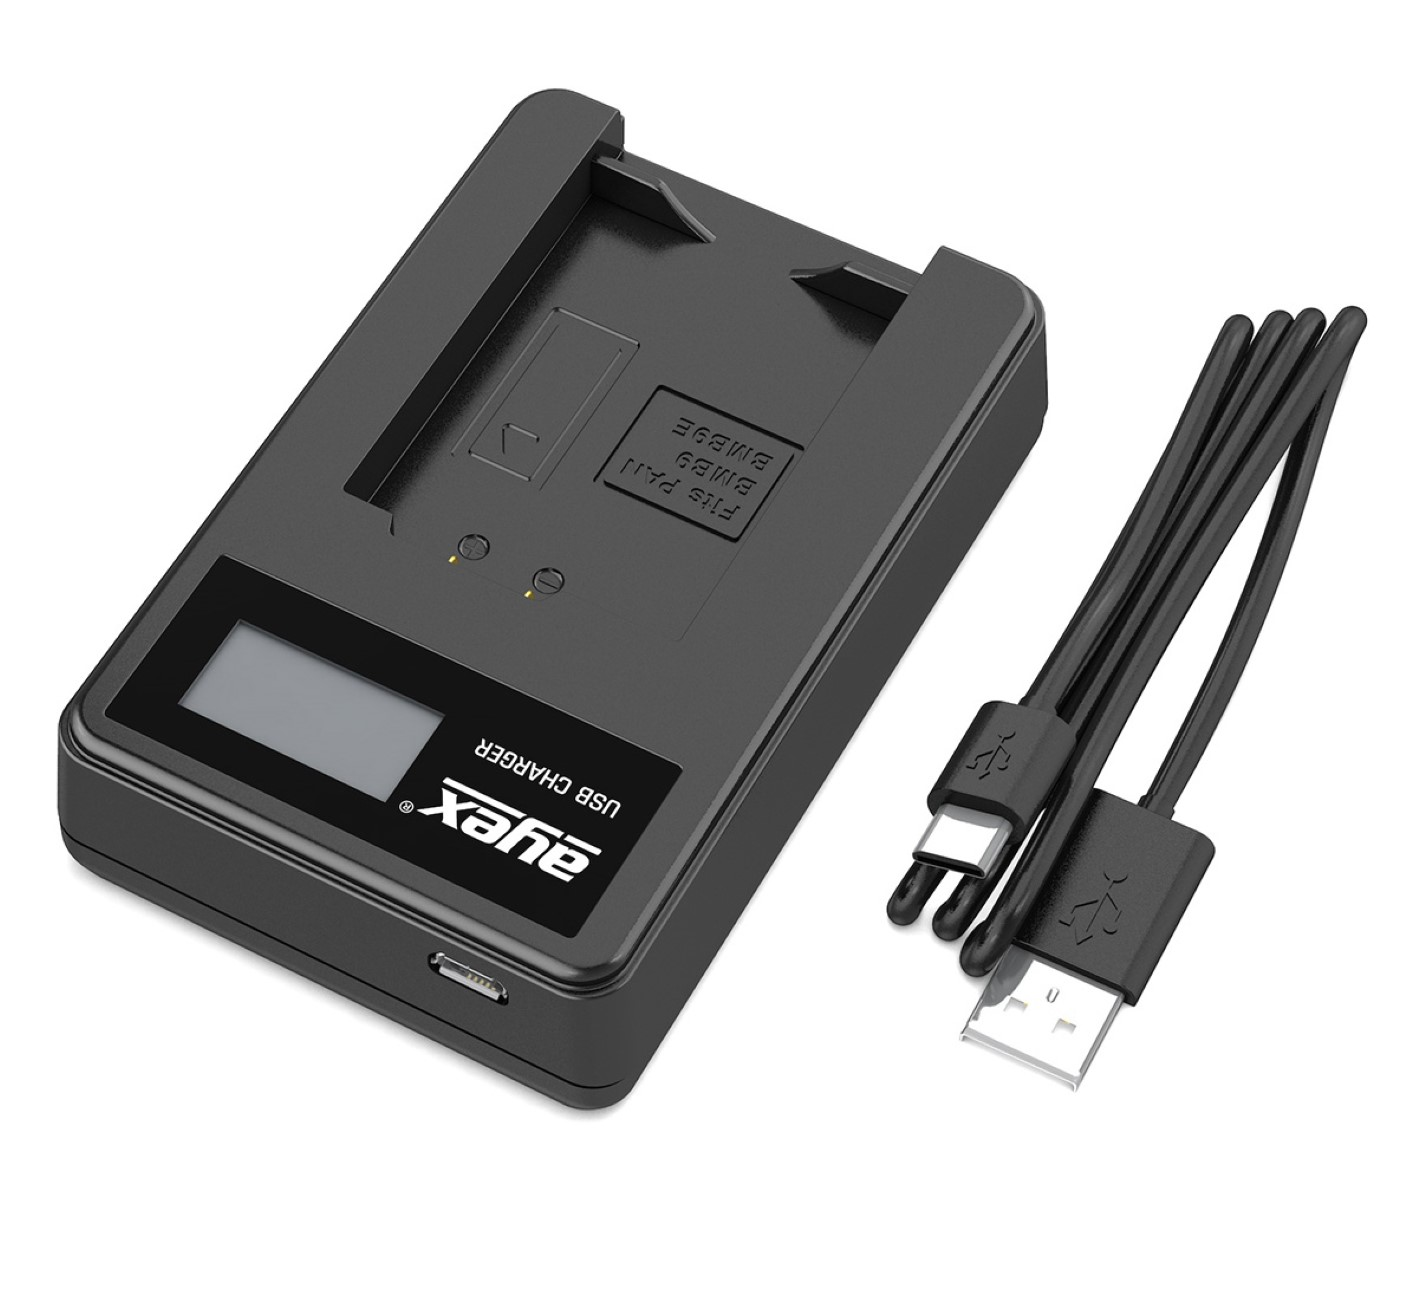 AYEX USB Ladegerät für Panasonic Kamera-Akku Lader, DMW-BMB9 Black Akku, DMW-BMB9E